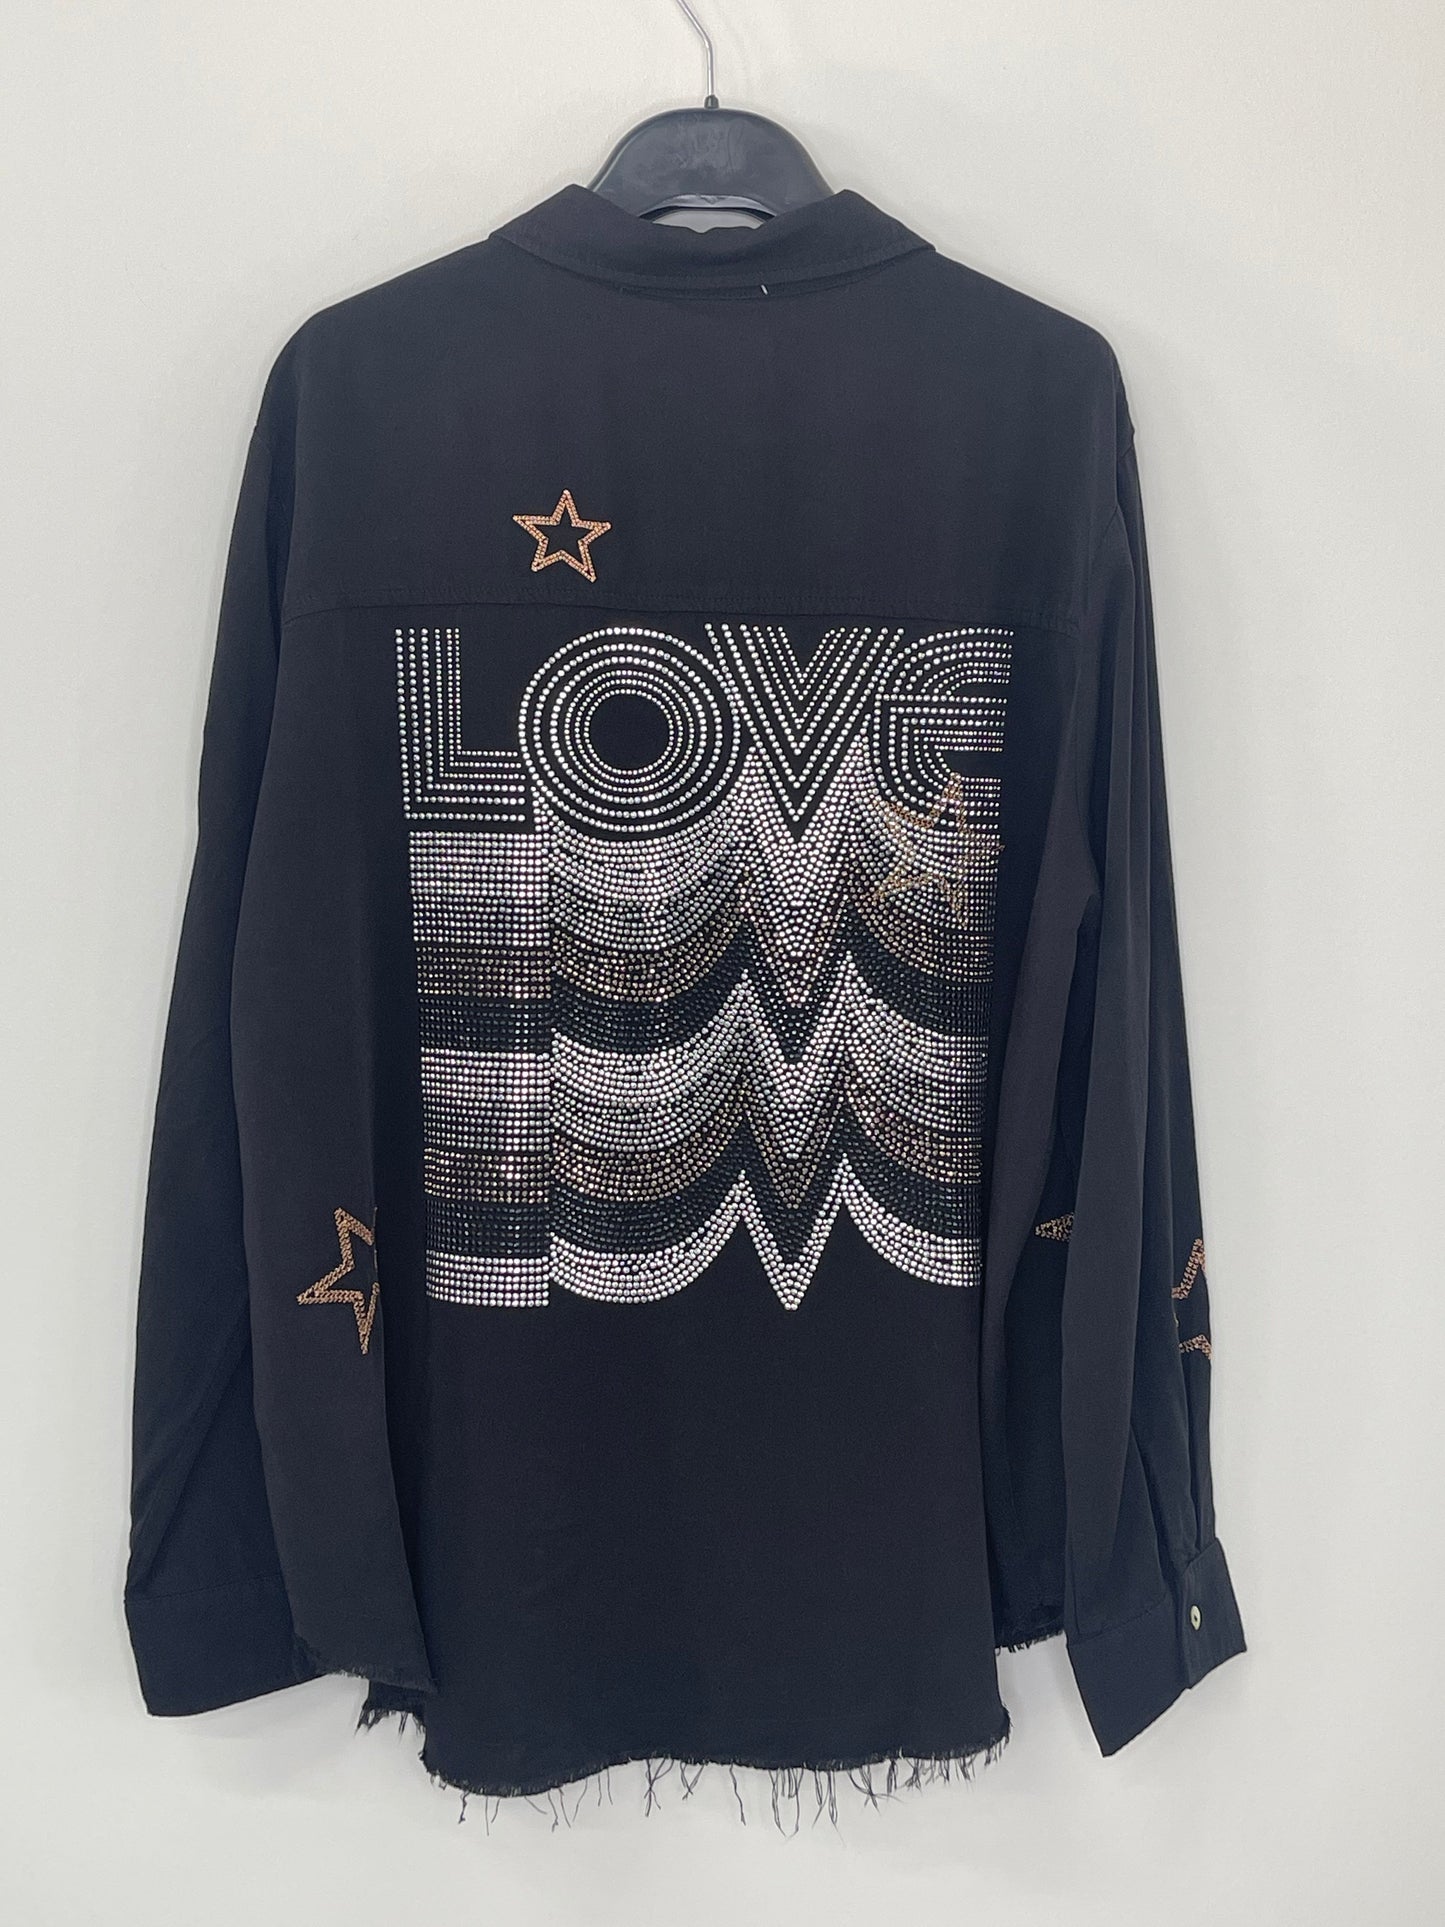 Shirt, Embroidered Star Black, Gunmetal Love Repeater